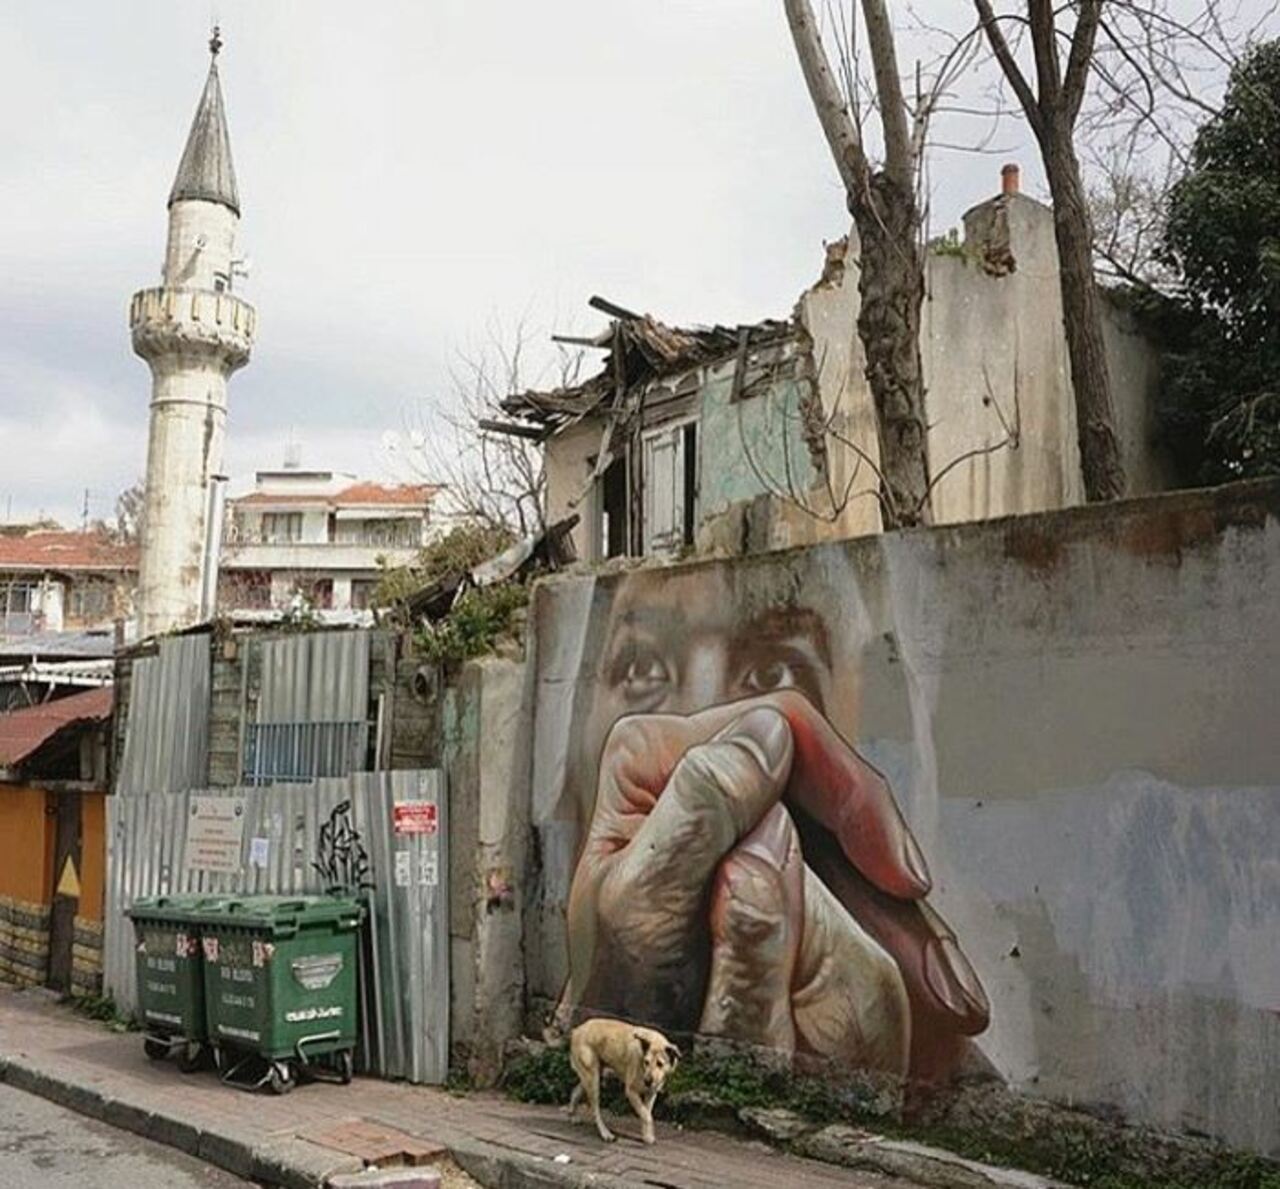 Great art by German artist Andreas von Chrzanowski aka Case MaClaim in Istanbul, Turkey #streetart #artderue #artedelcalle #стритарт #граффити #urbanart #arteurbano #mural #graffiti #wallart #casemaclaim #istanbul #turkey  via http://Widewalls.ch | https://goo.gl/kdMXpC https://t.co/J2YOFiKLeO